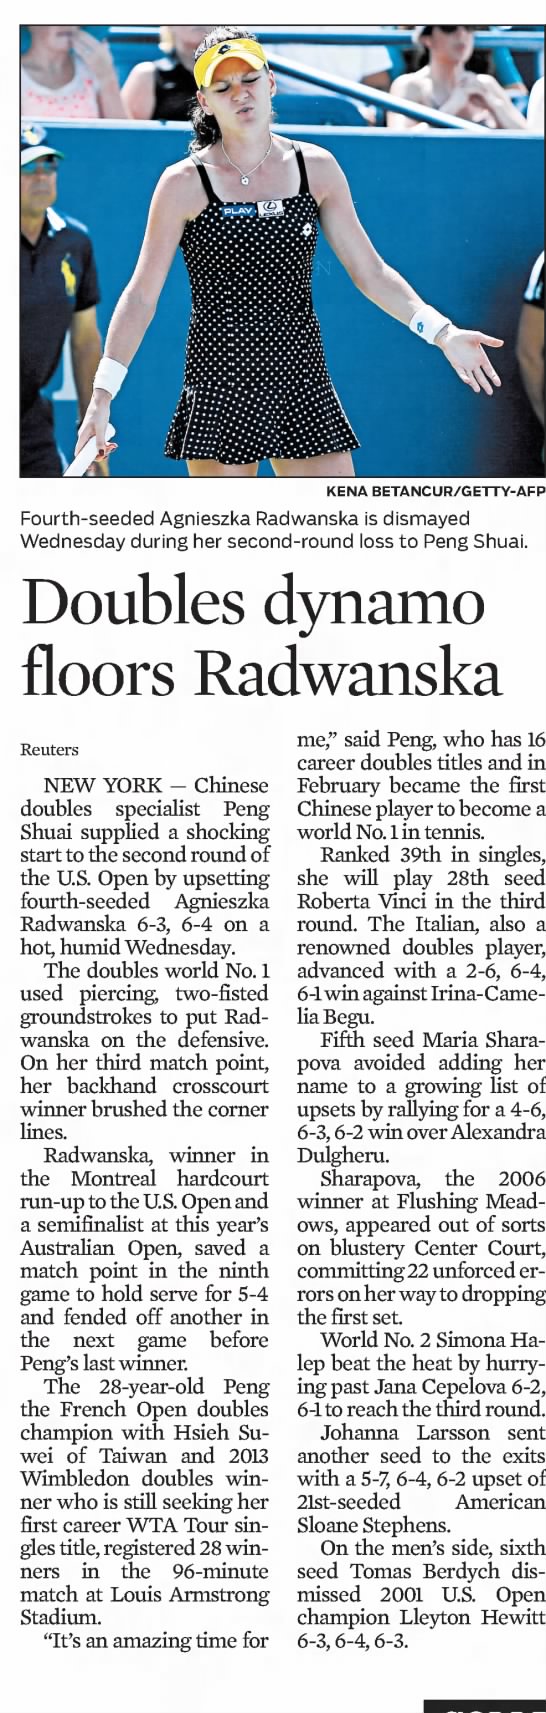 Doubles dynamo floors Radwanska - 